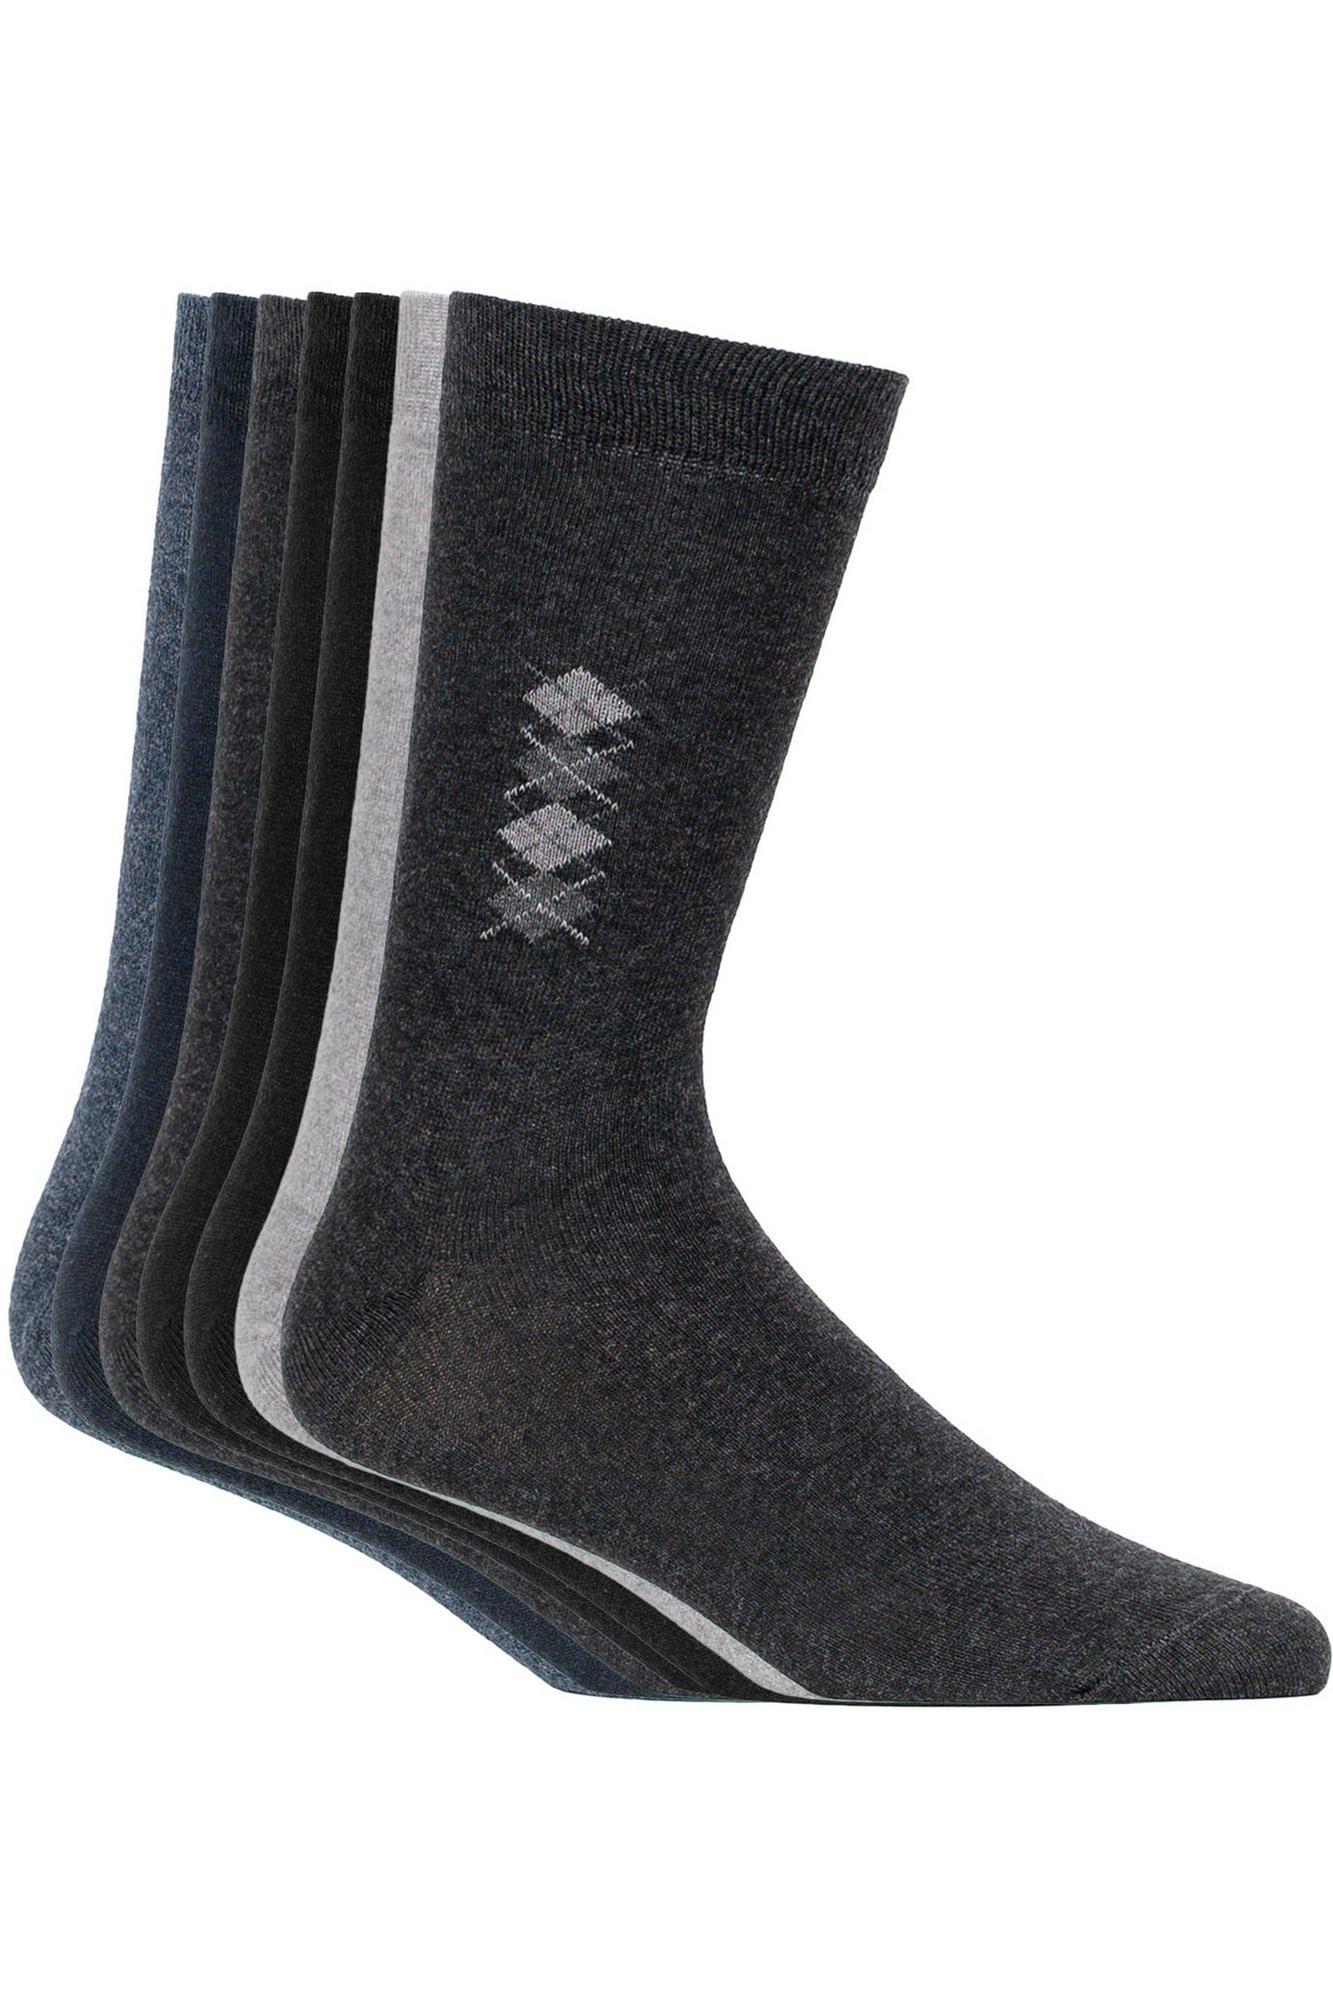 Ziglar Sustainable Socks (Pack of 7)